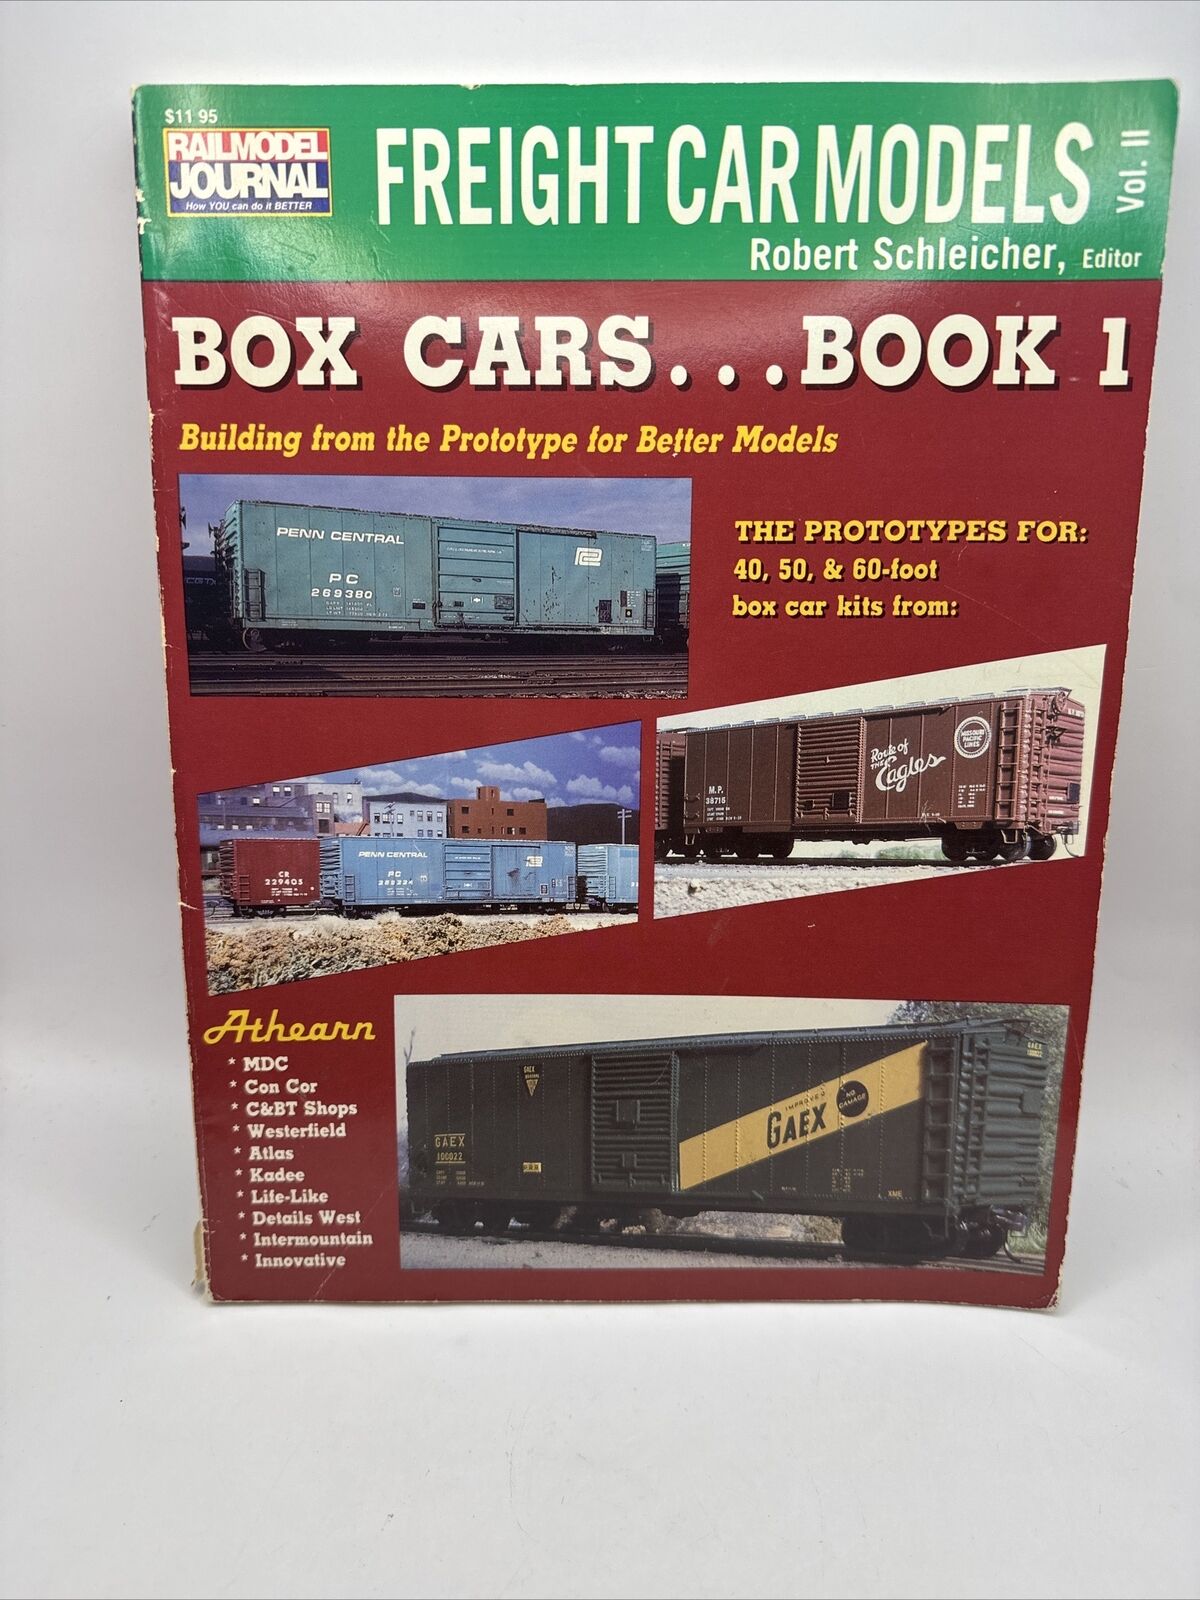 Freight Car Models Vol 2 by Robert Schleicher Box Cars Book 1 RailModel Journal